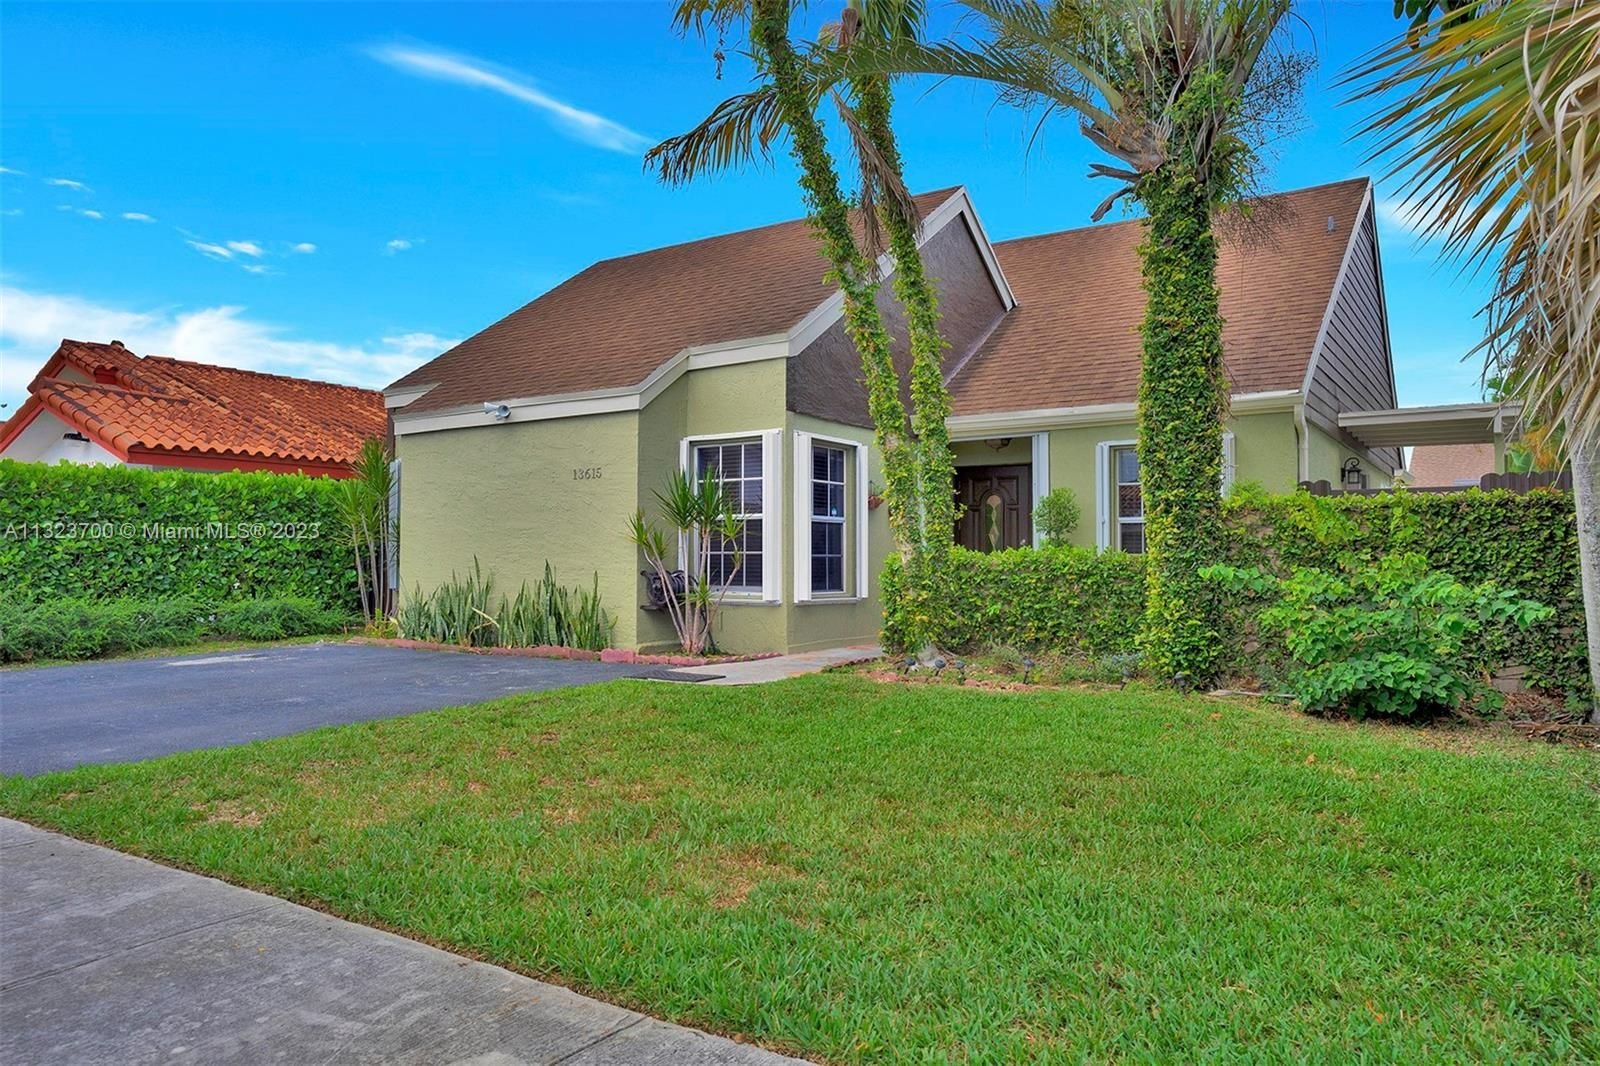 Real estate property located at 13615 99th St, Miami-Dade County, Miami, FL